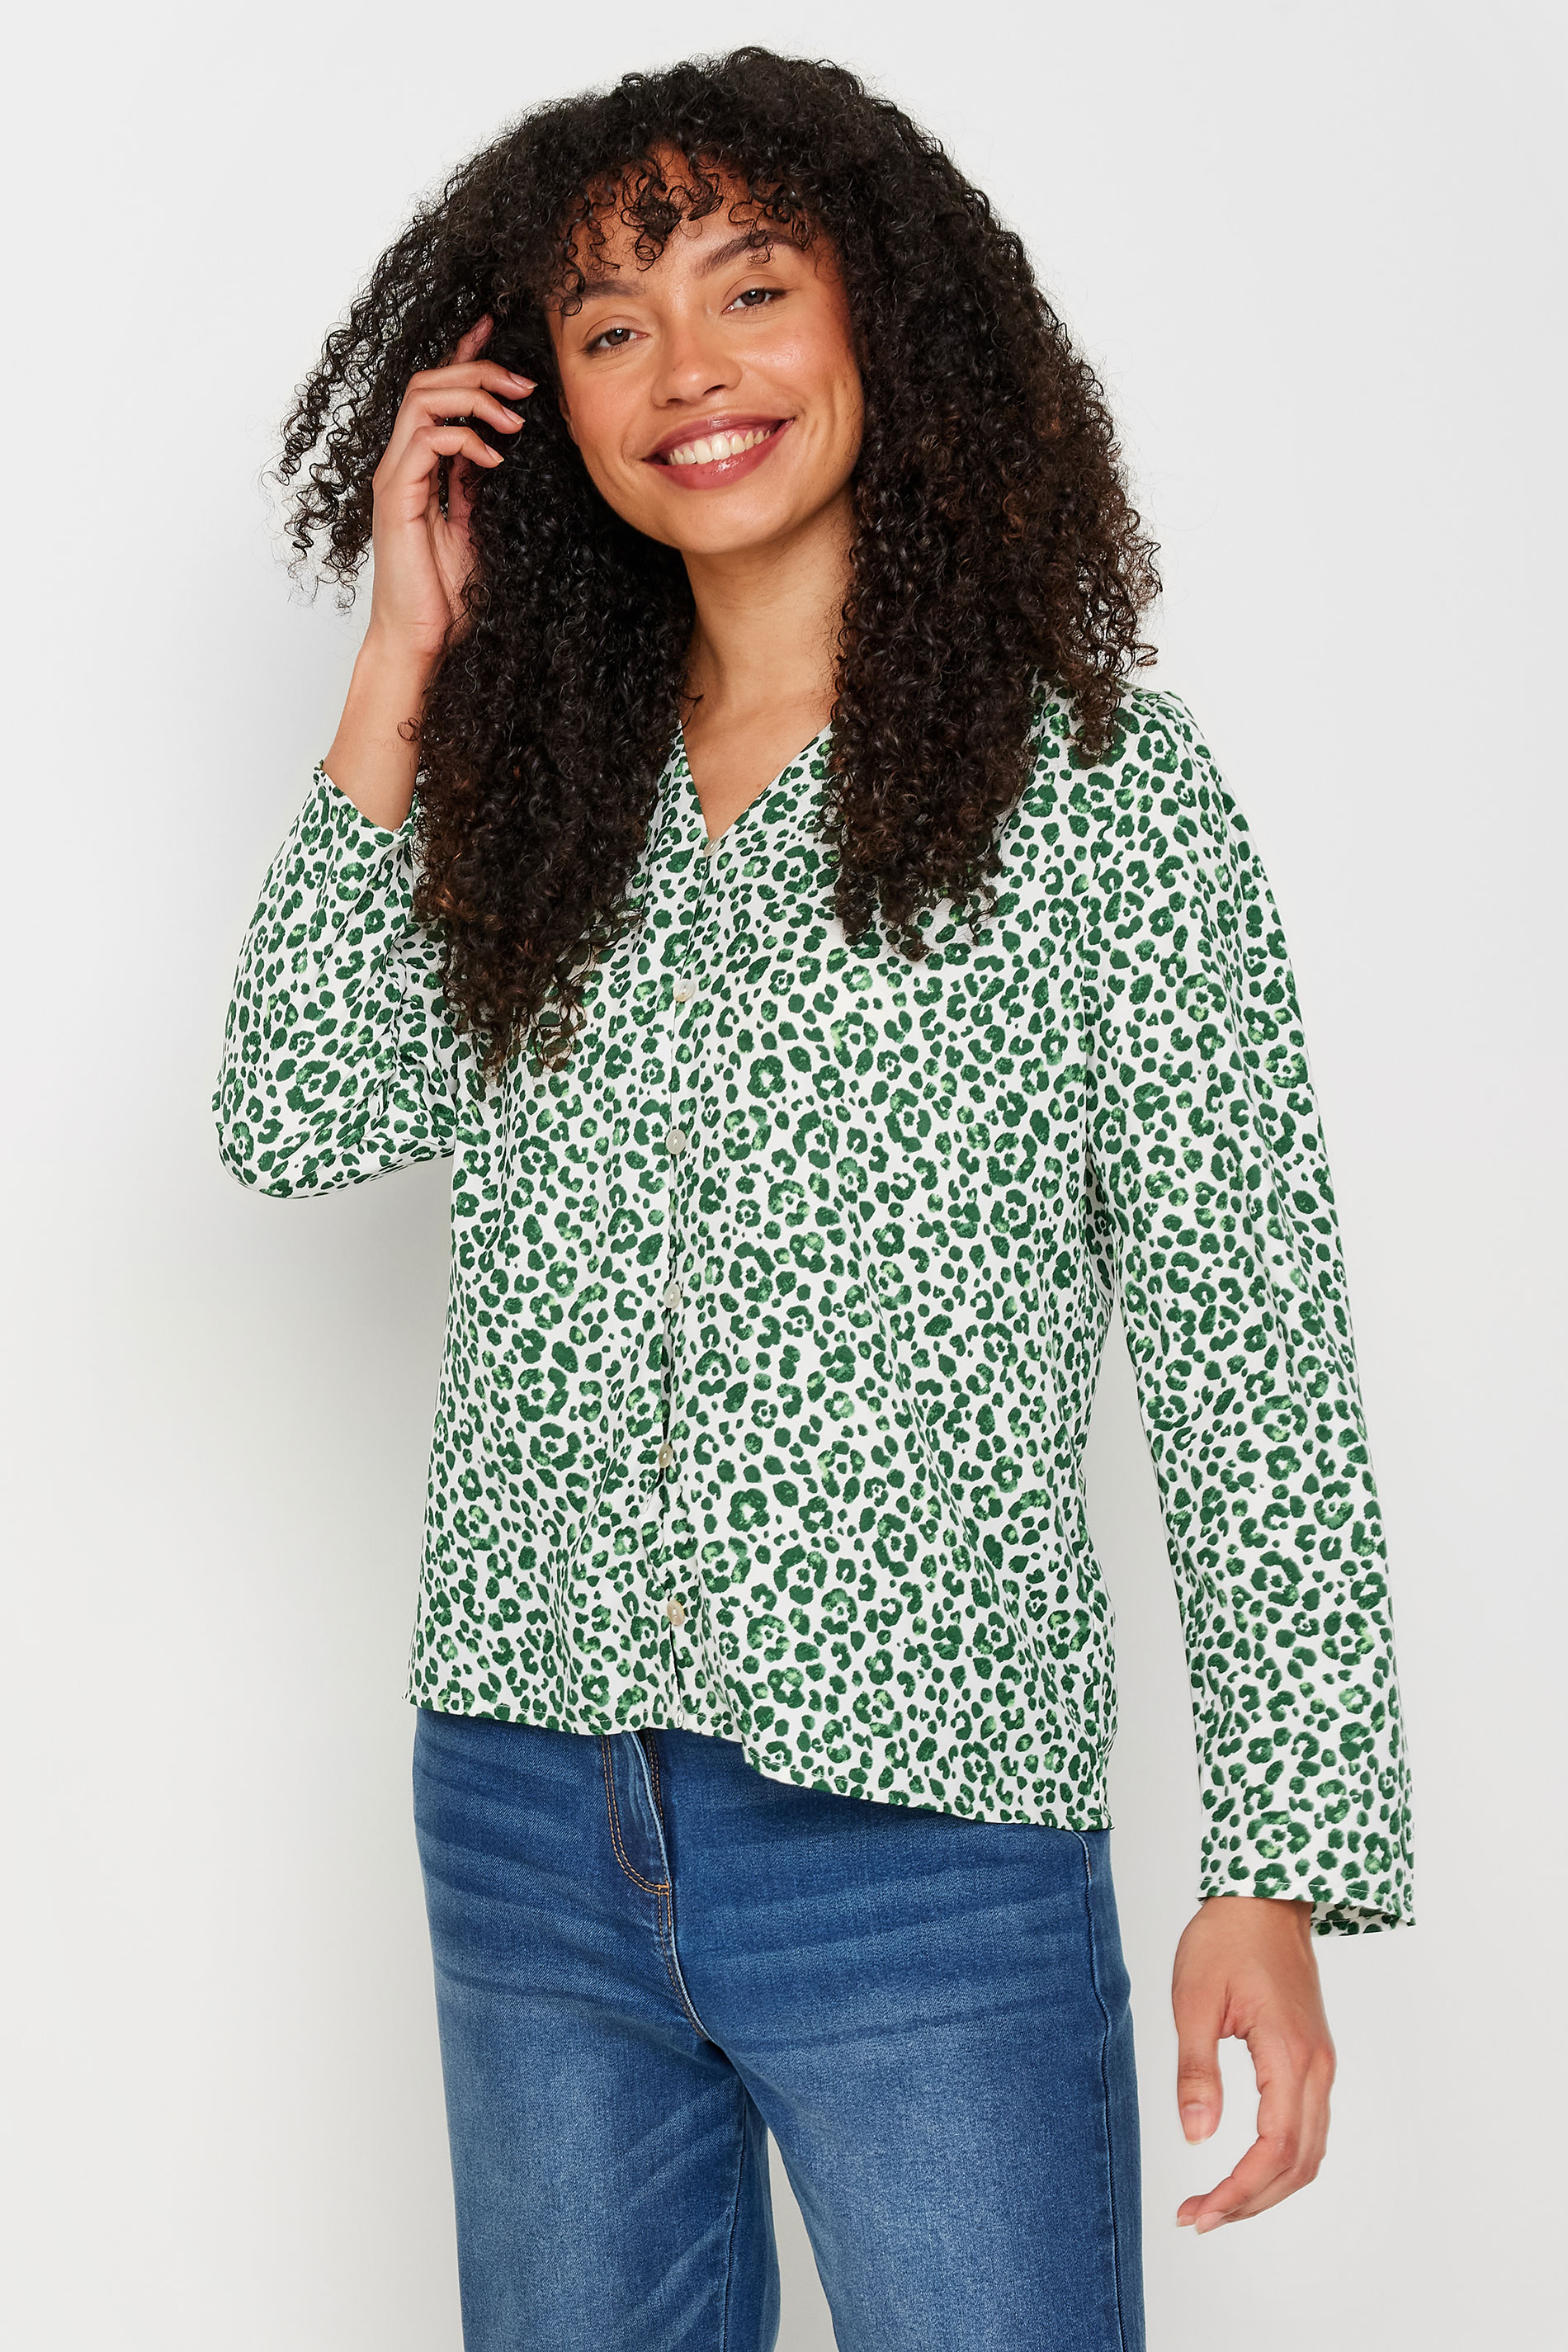 M&Co Green Leopard Print Long Sleeve Blouse | M&Co 1